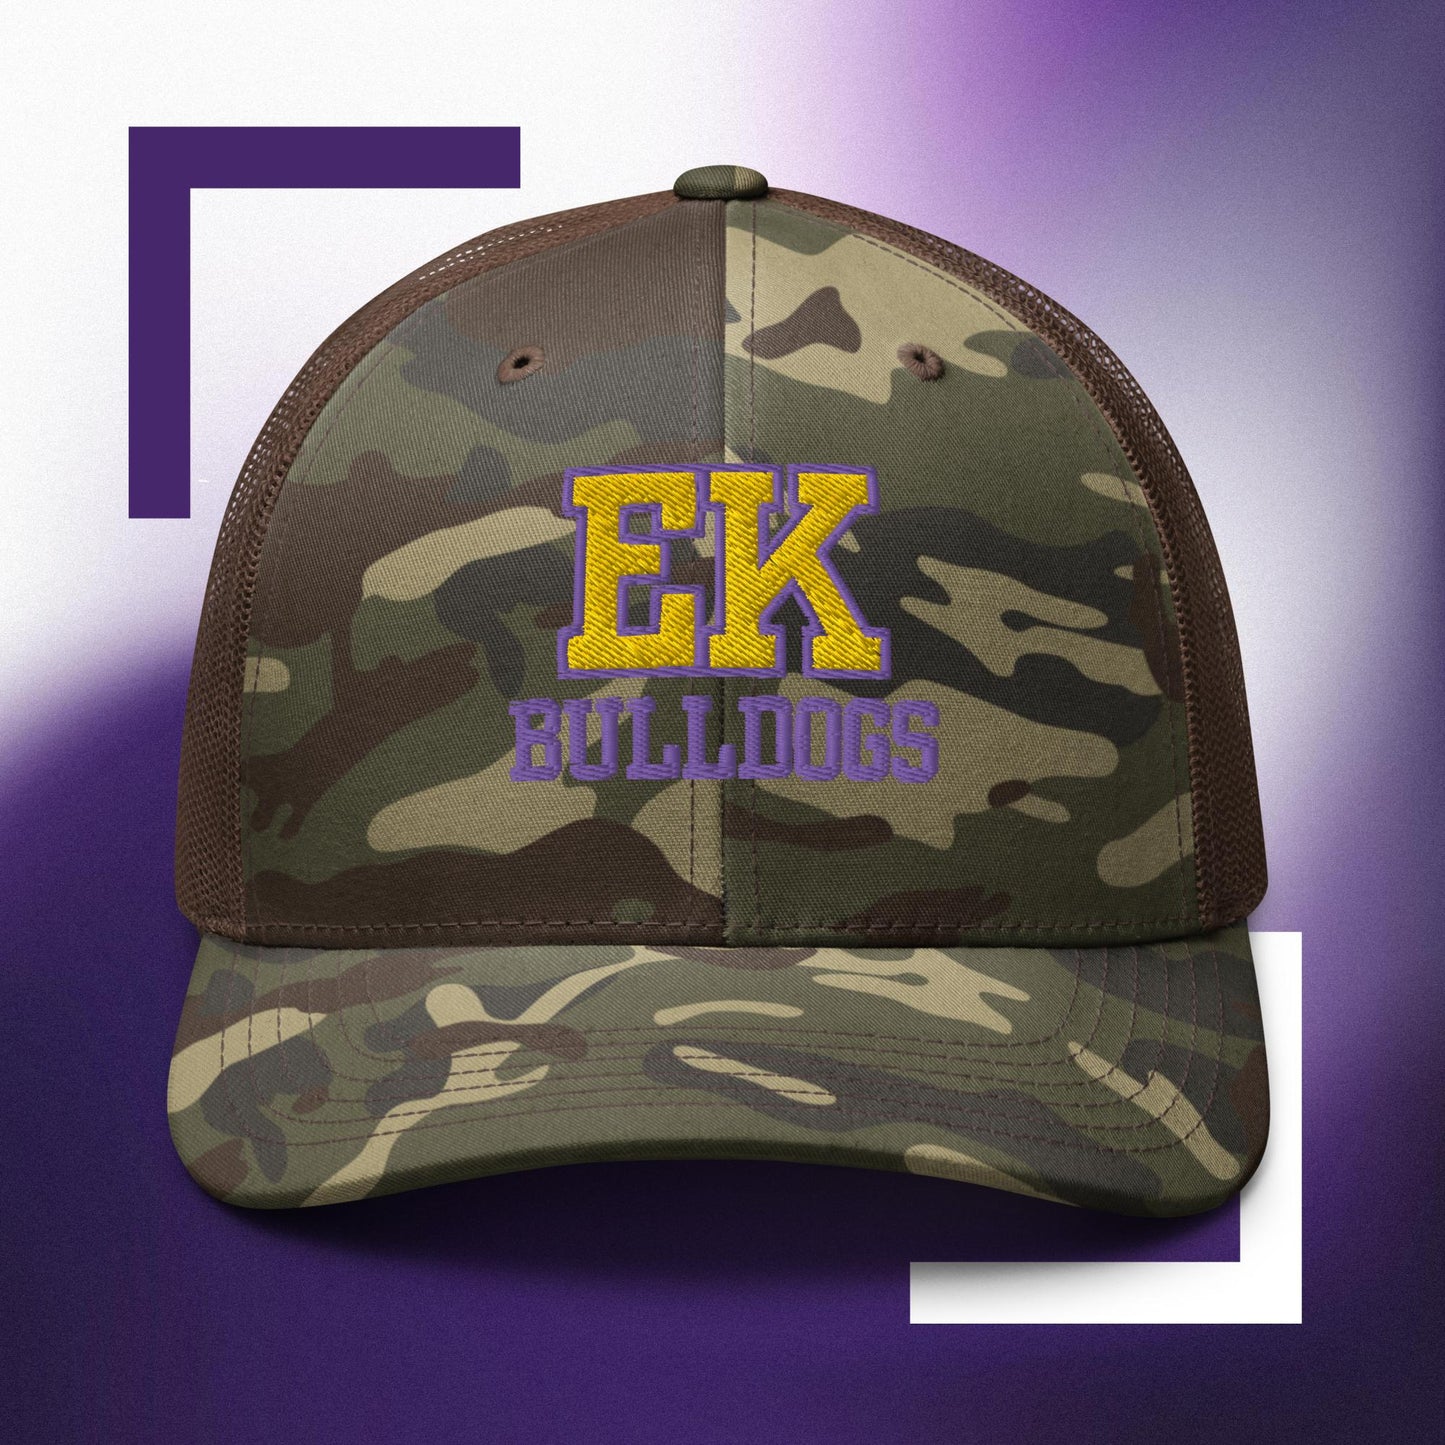 EK Bulldogs Camouflage Embroidered trucker hat